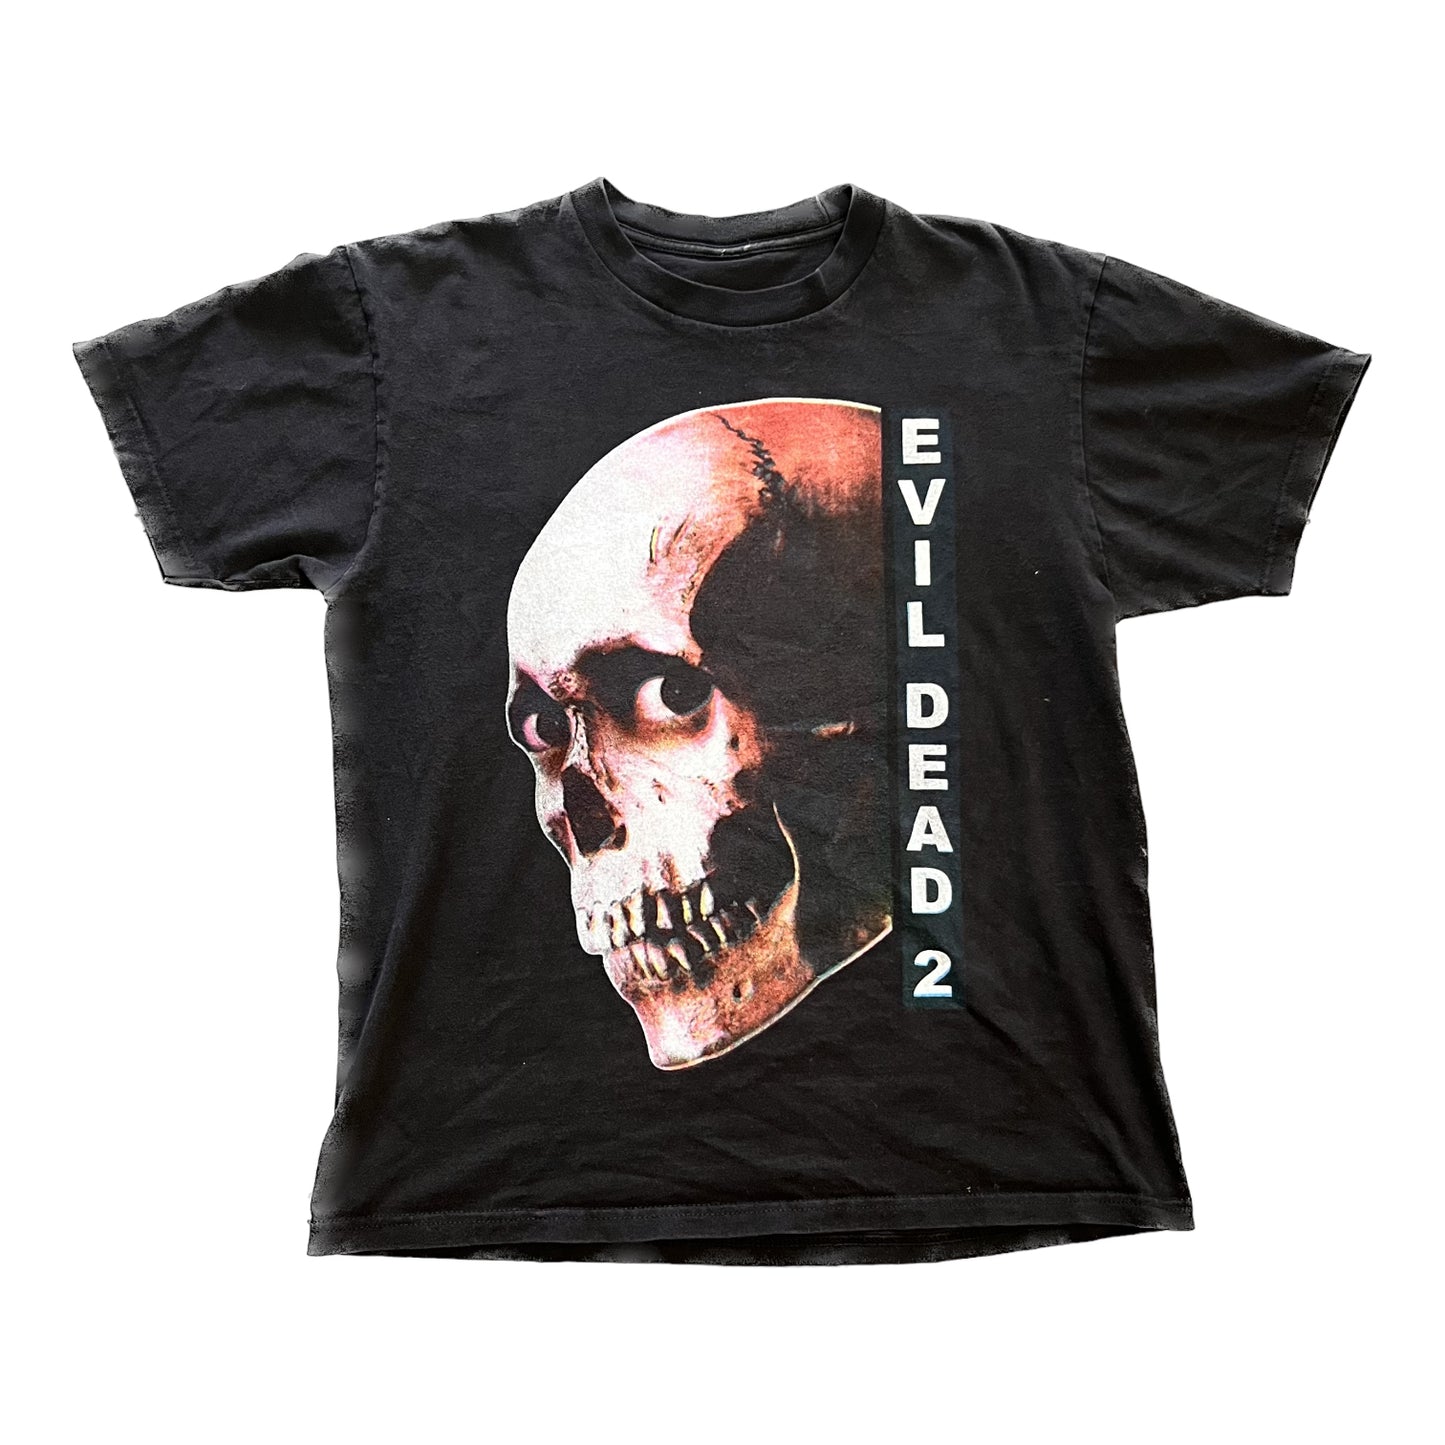 Evil dead 2 T-shirt (Limited Drop)